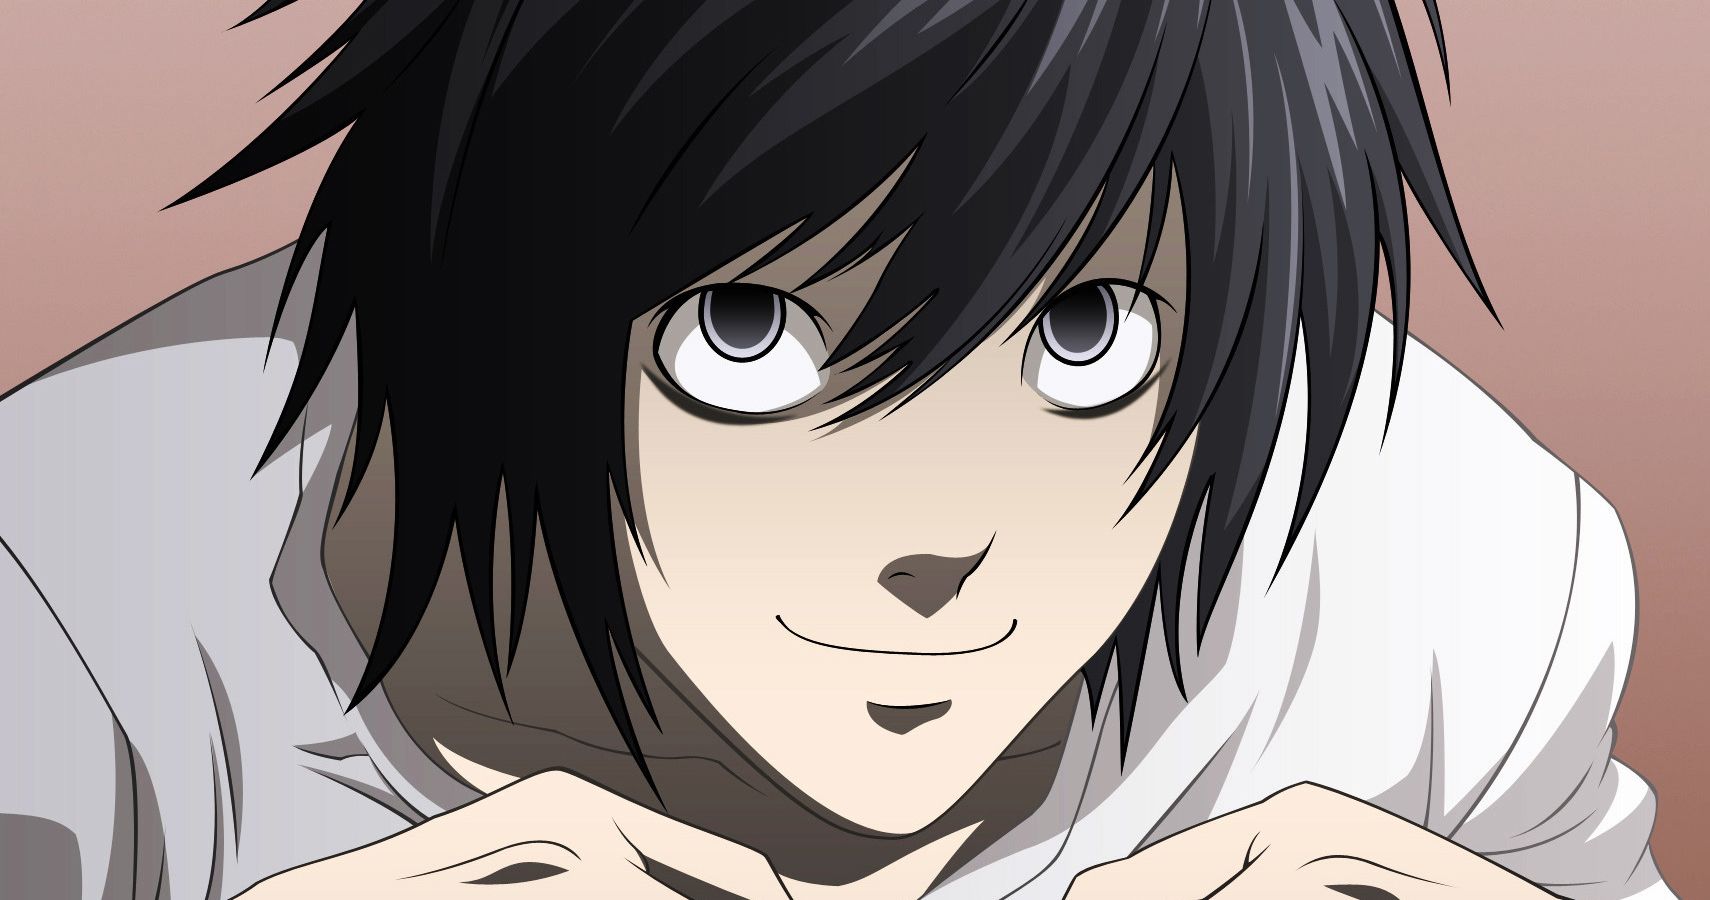 10 Things About Death Note Hero, L, That Make No Sense